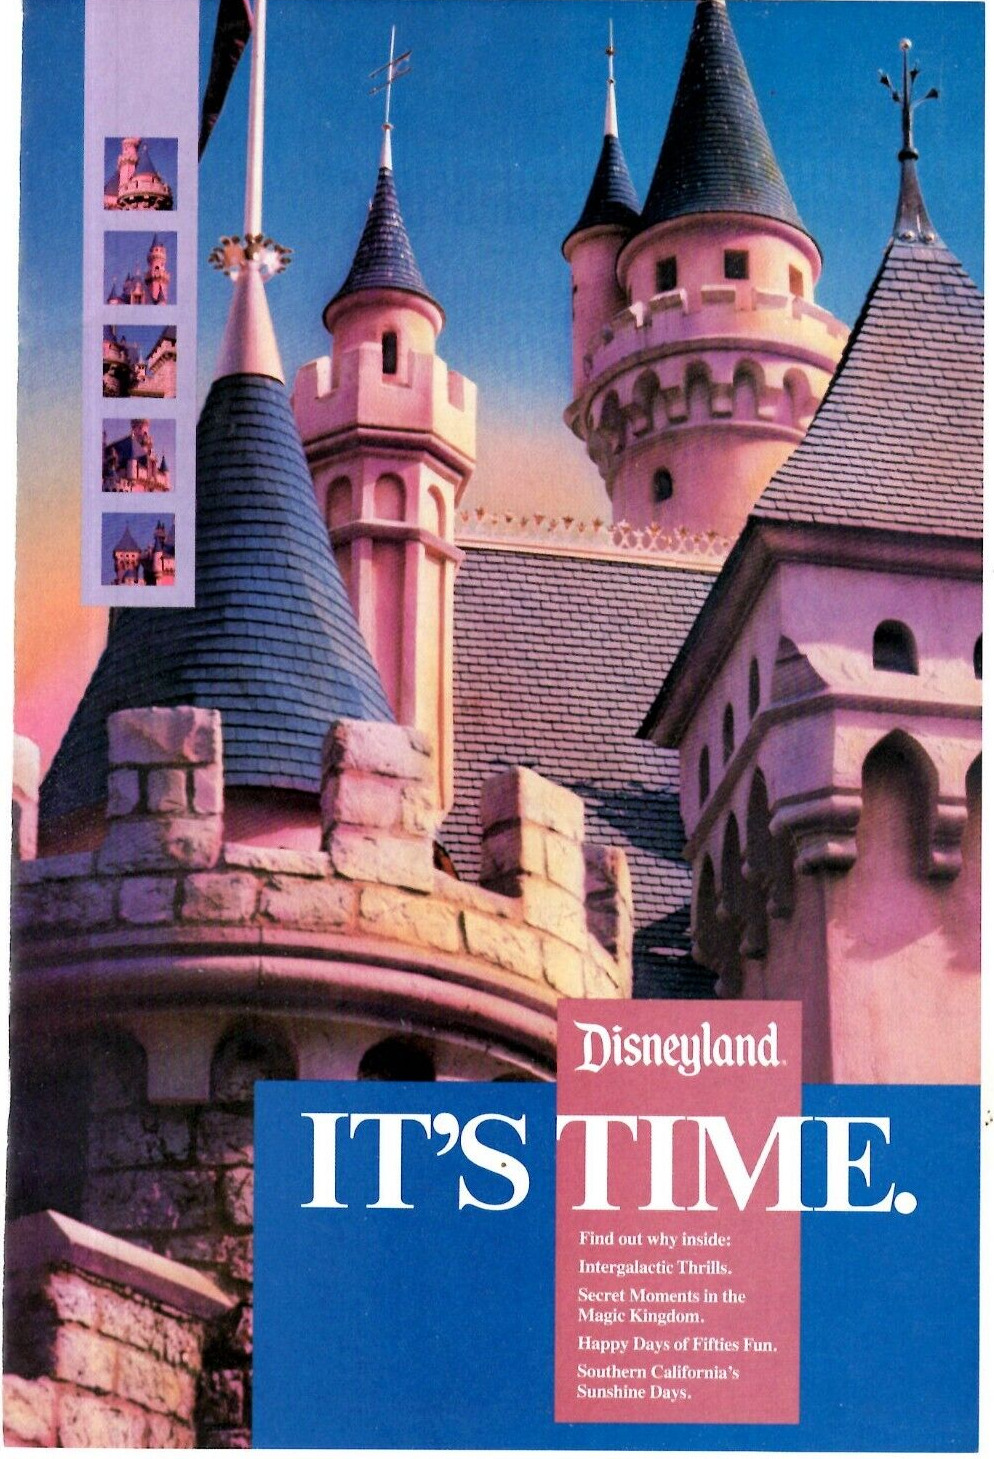 1988 Print Ad Disneyland Michael Jackson Star Wars Disney Channel Queen Mary